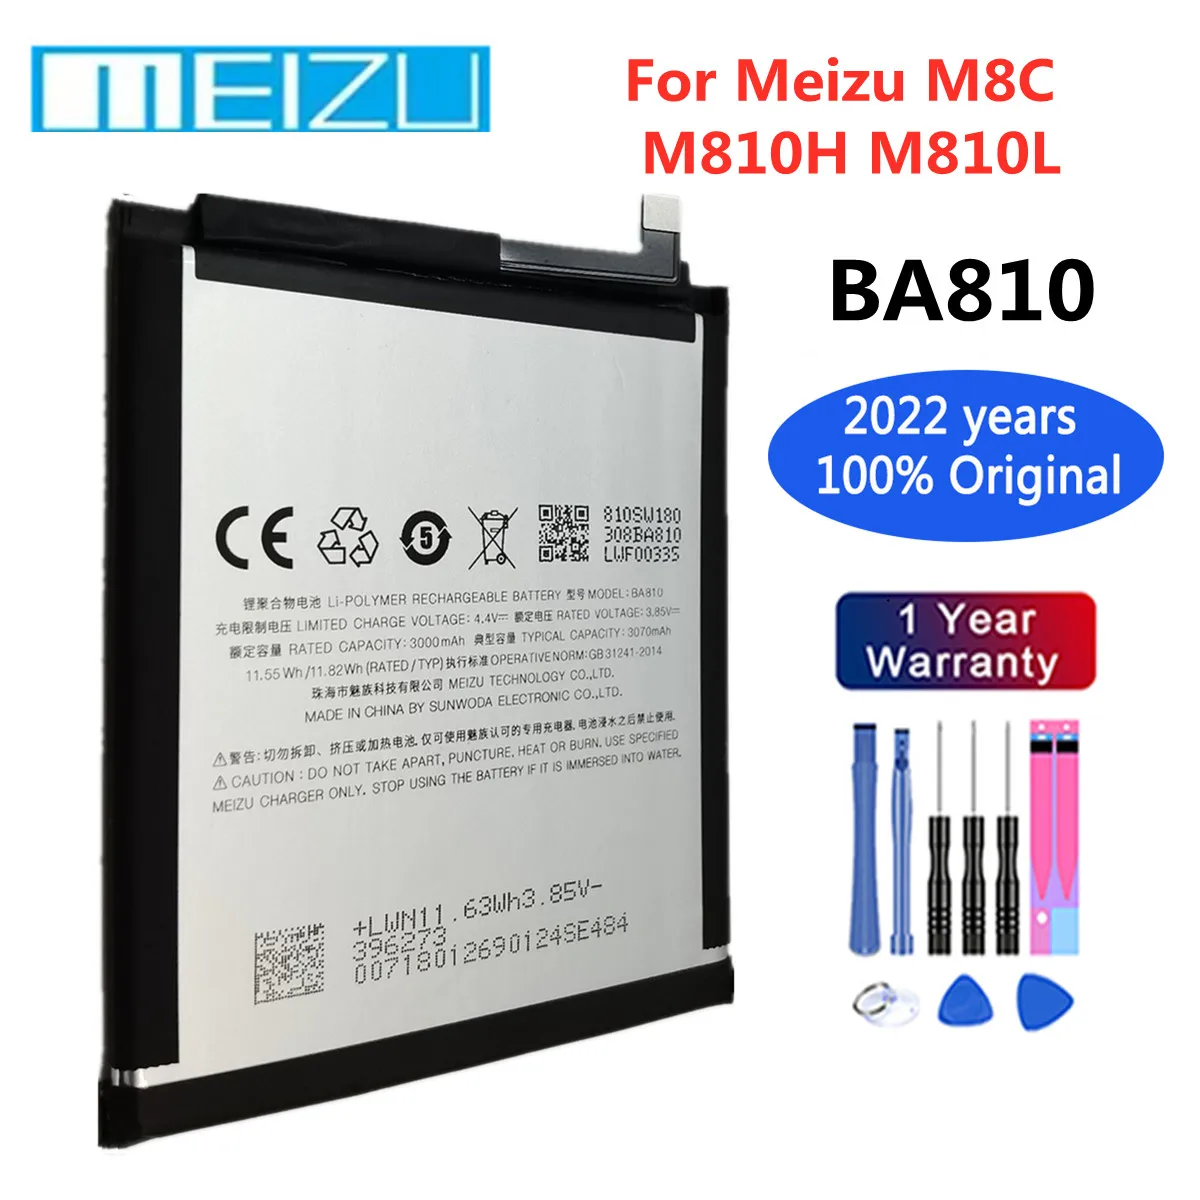 

New 100% Orginal BA810 Battery For Meizu M8C M810L M810H 3070mAh Smart Mobile Phone Replacement Rechargable Batteries Bateria